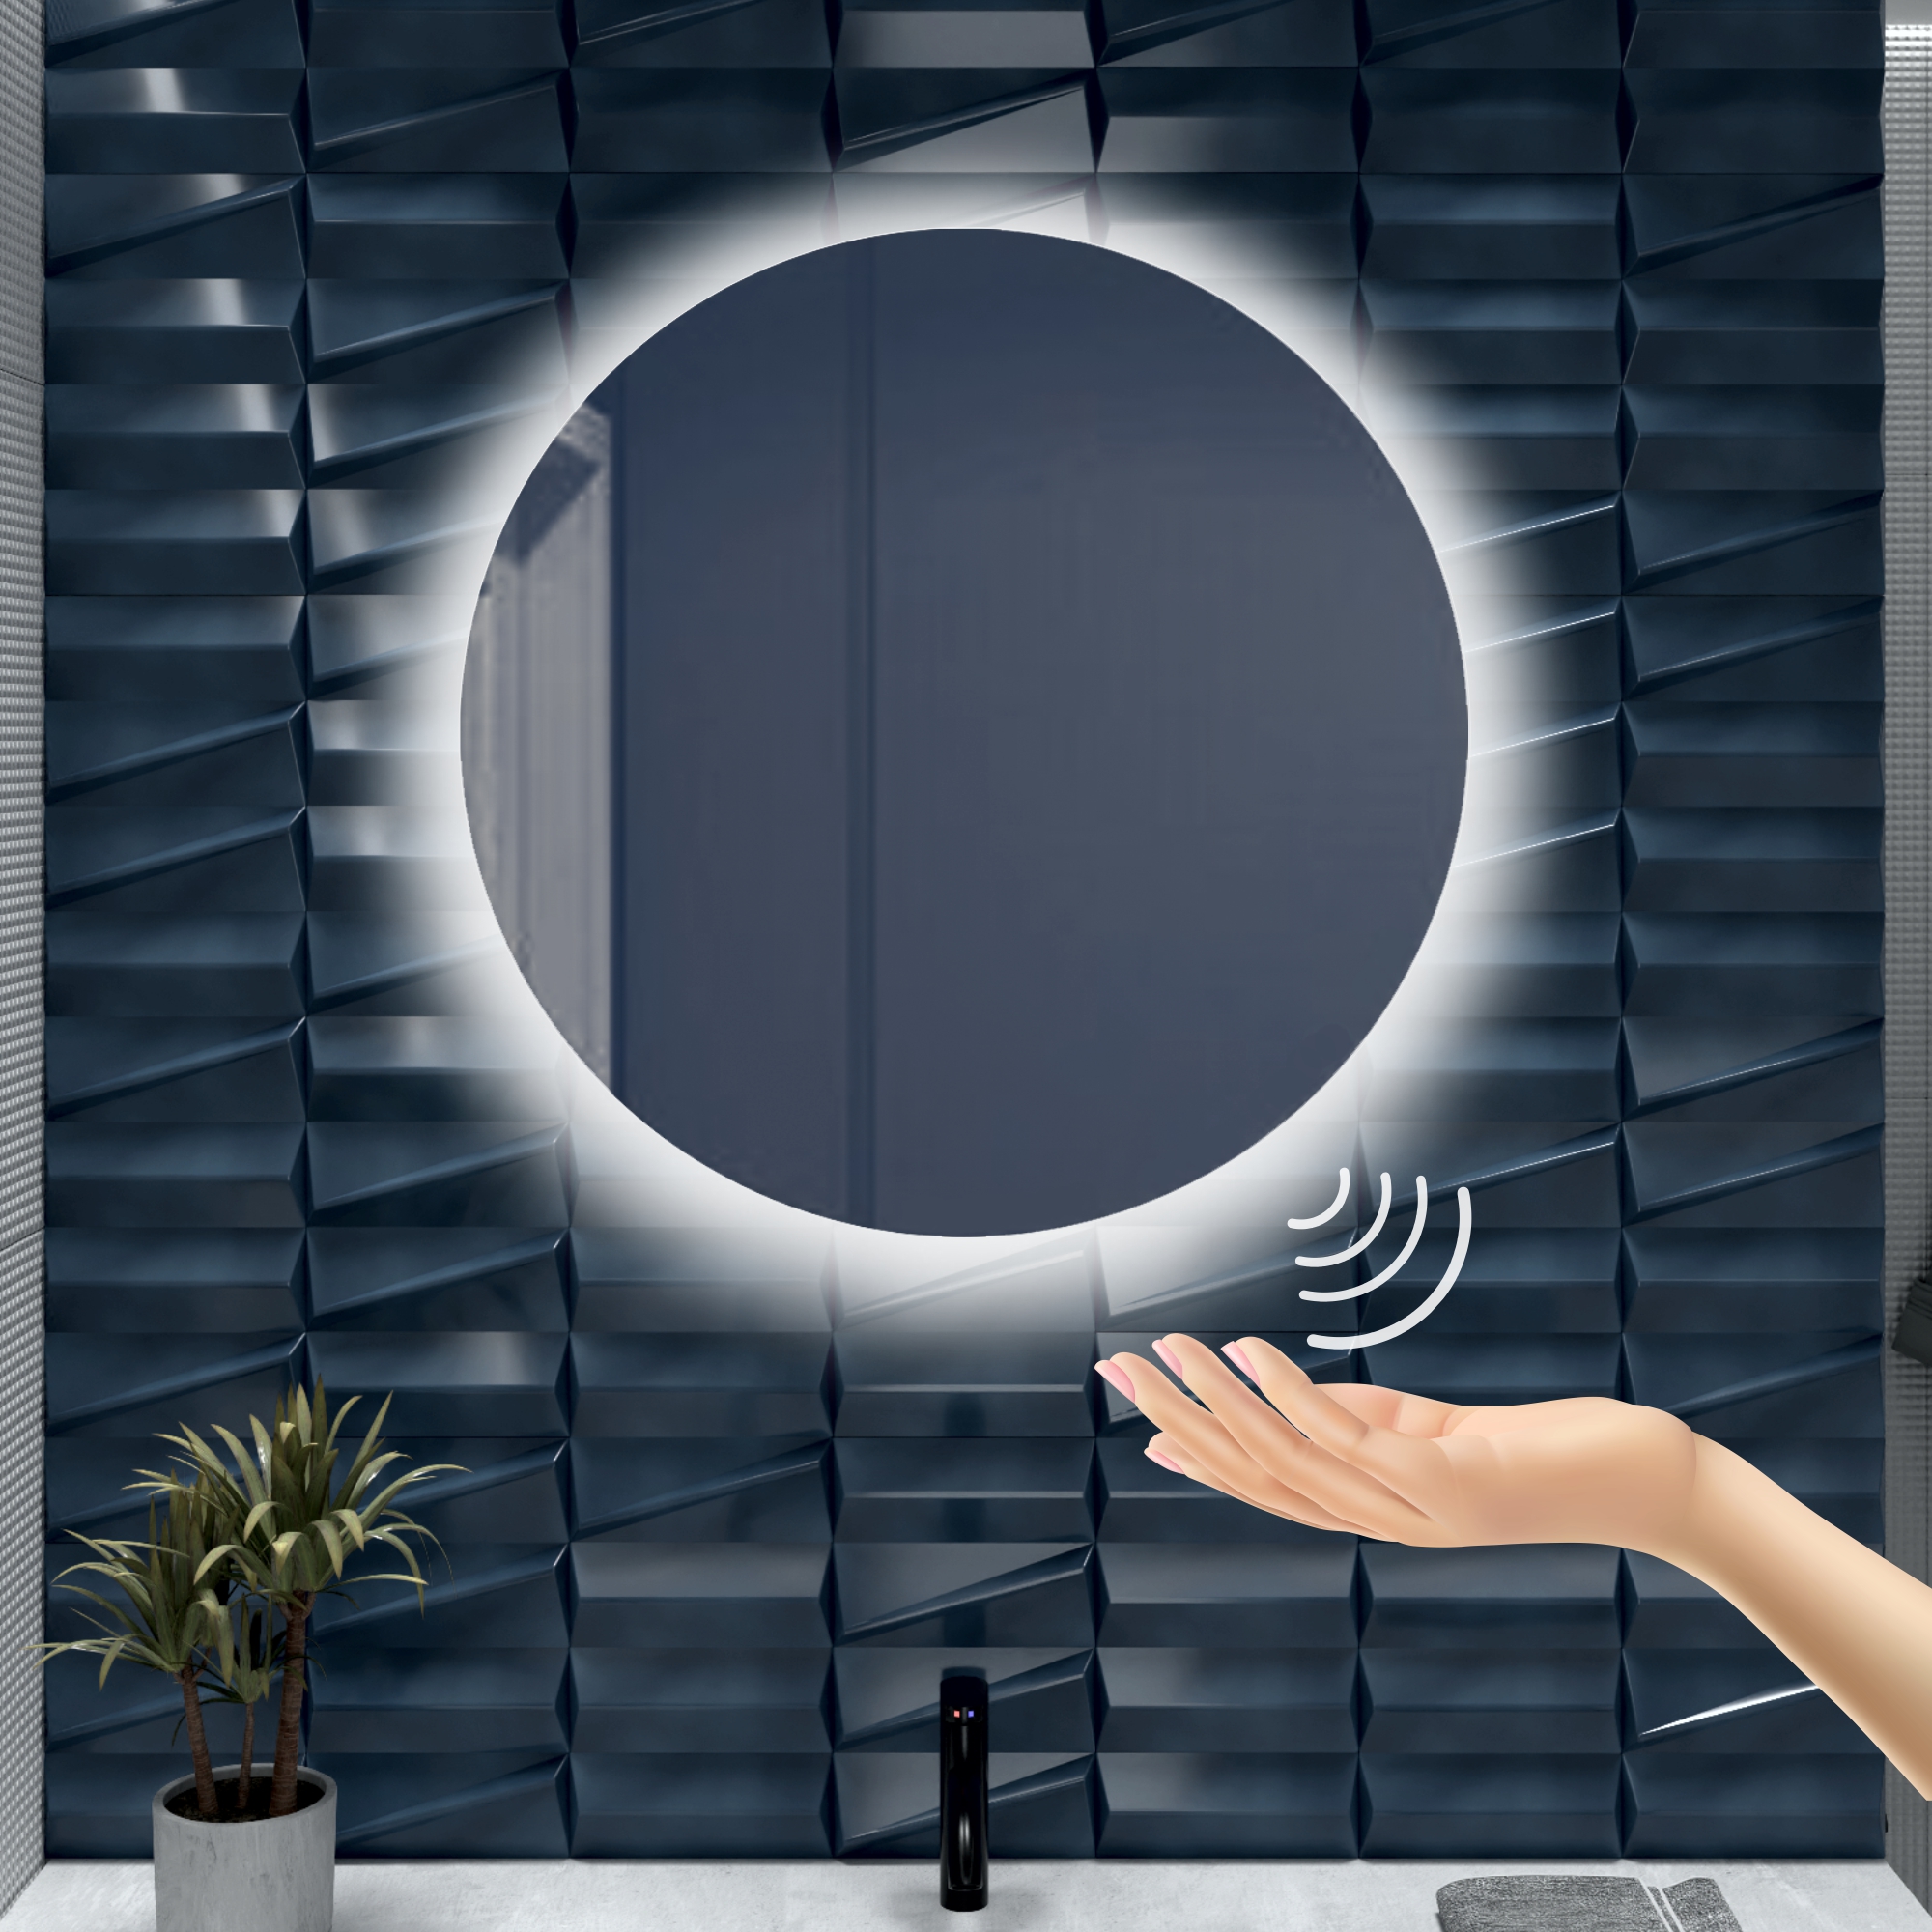 Зеркало для ванной Alfa Mirrors с холодной подсветкой 6500К круглое 90см, арт. Na-9Vzd зеркало для ванной alfa mirrors с дневной подсветкой 4200к круглое 60см арт na 6vzd